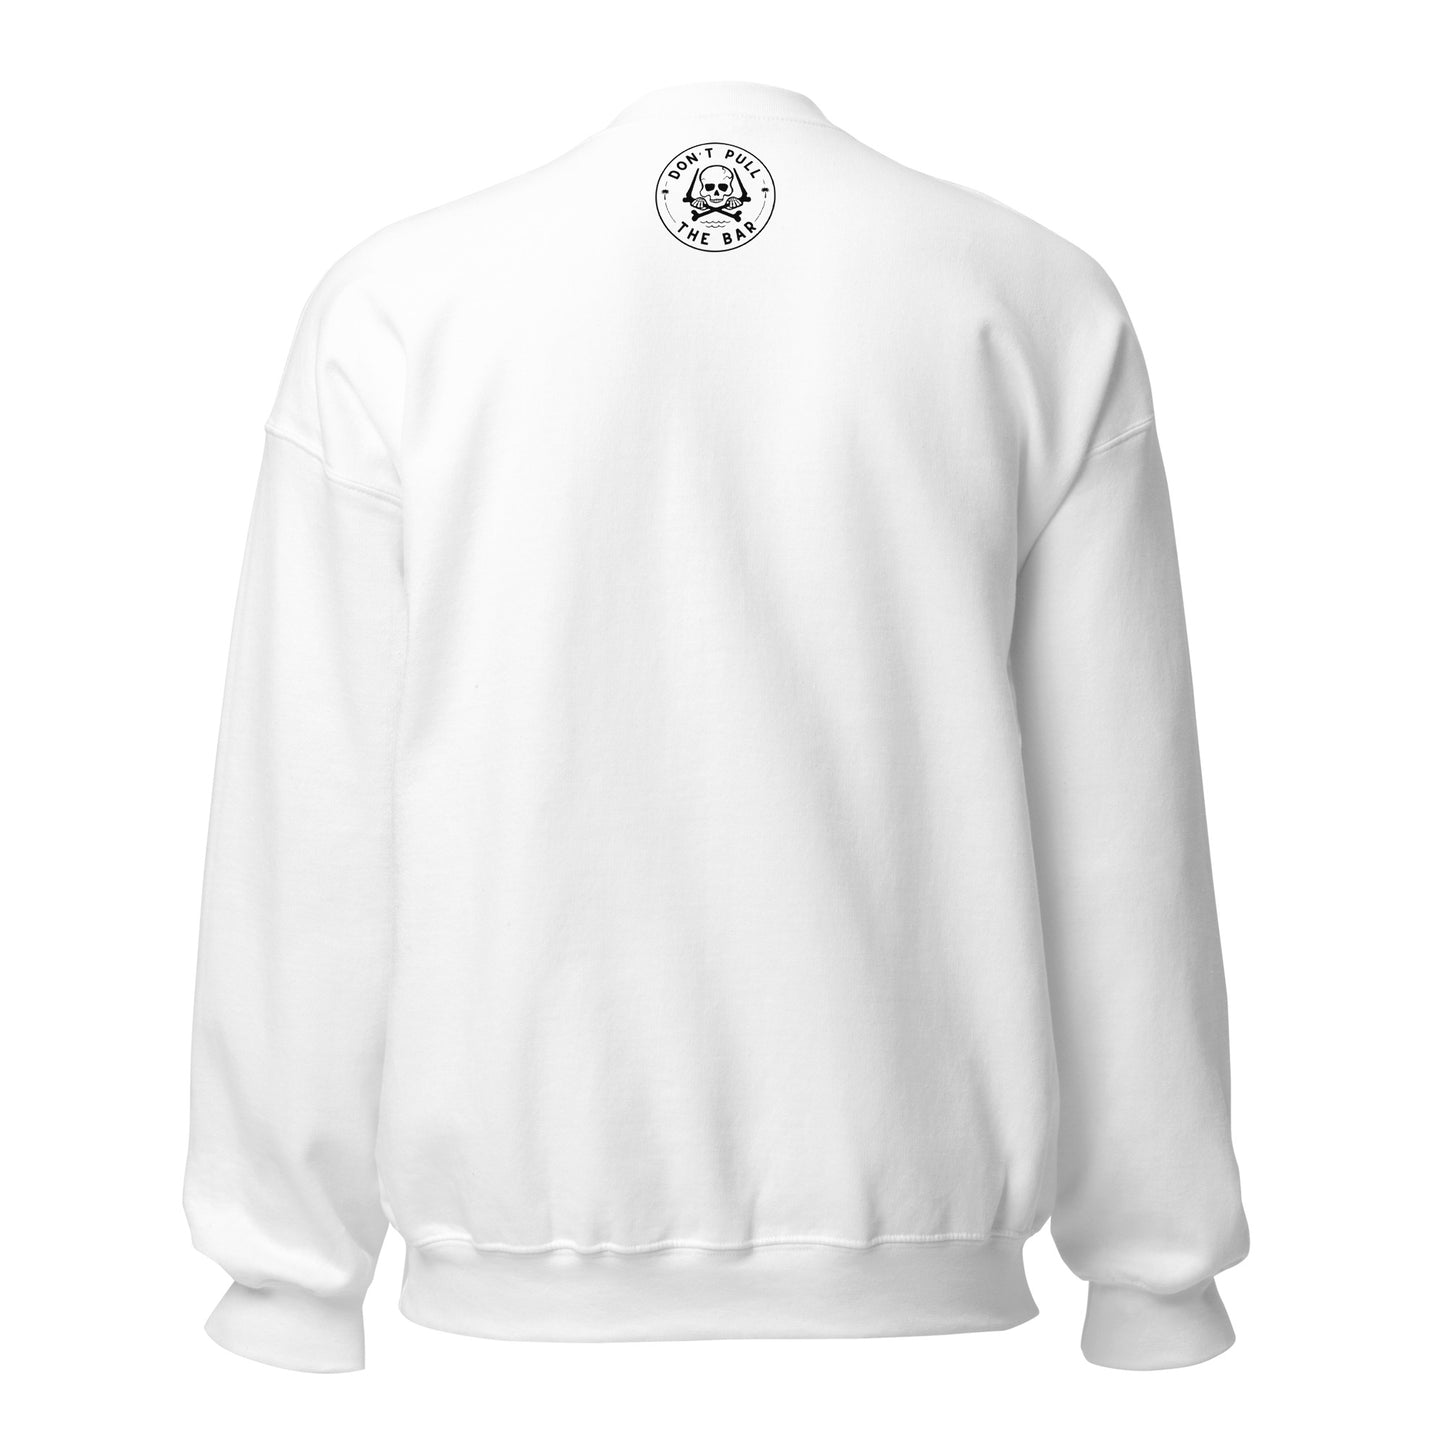 "LO STAGNONE" Premium Sweatshirt